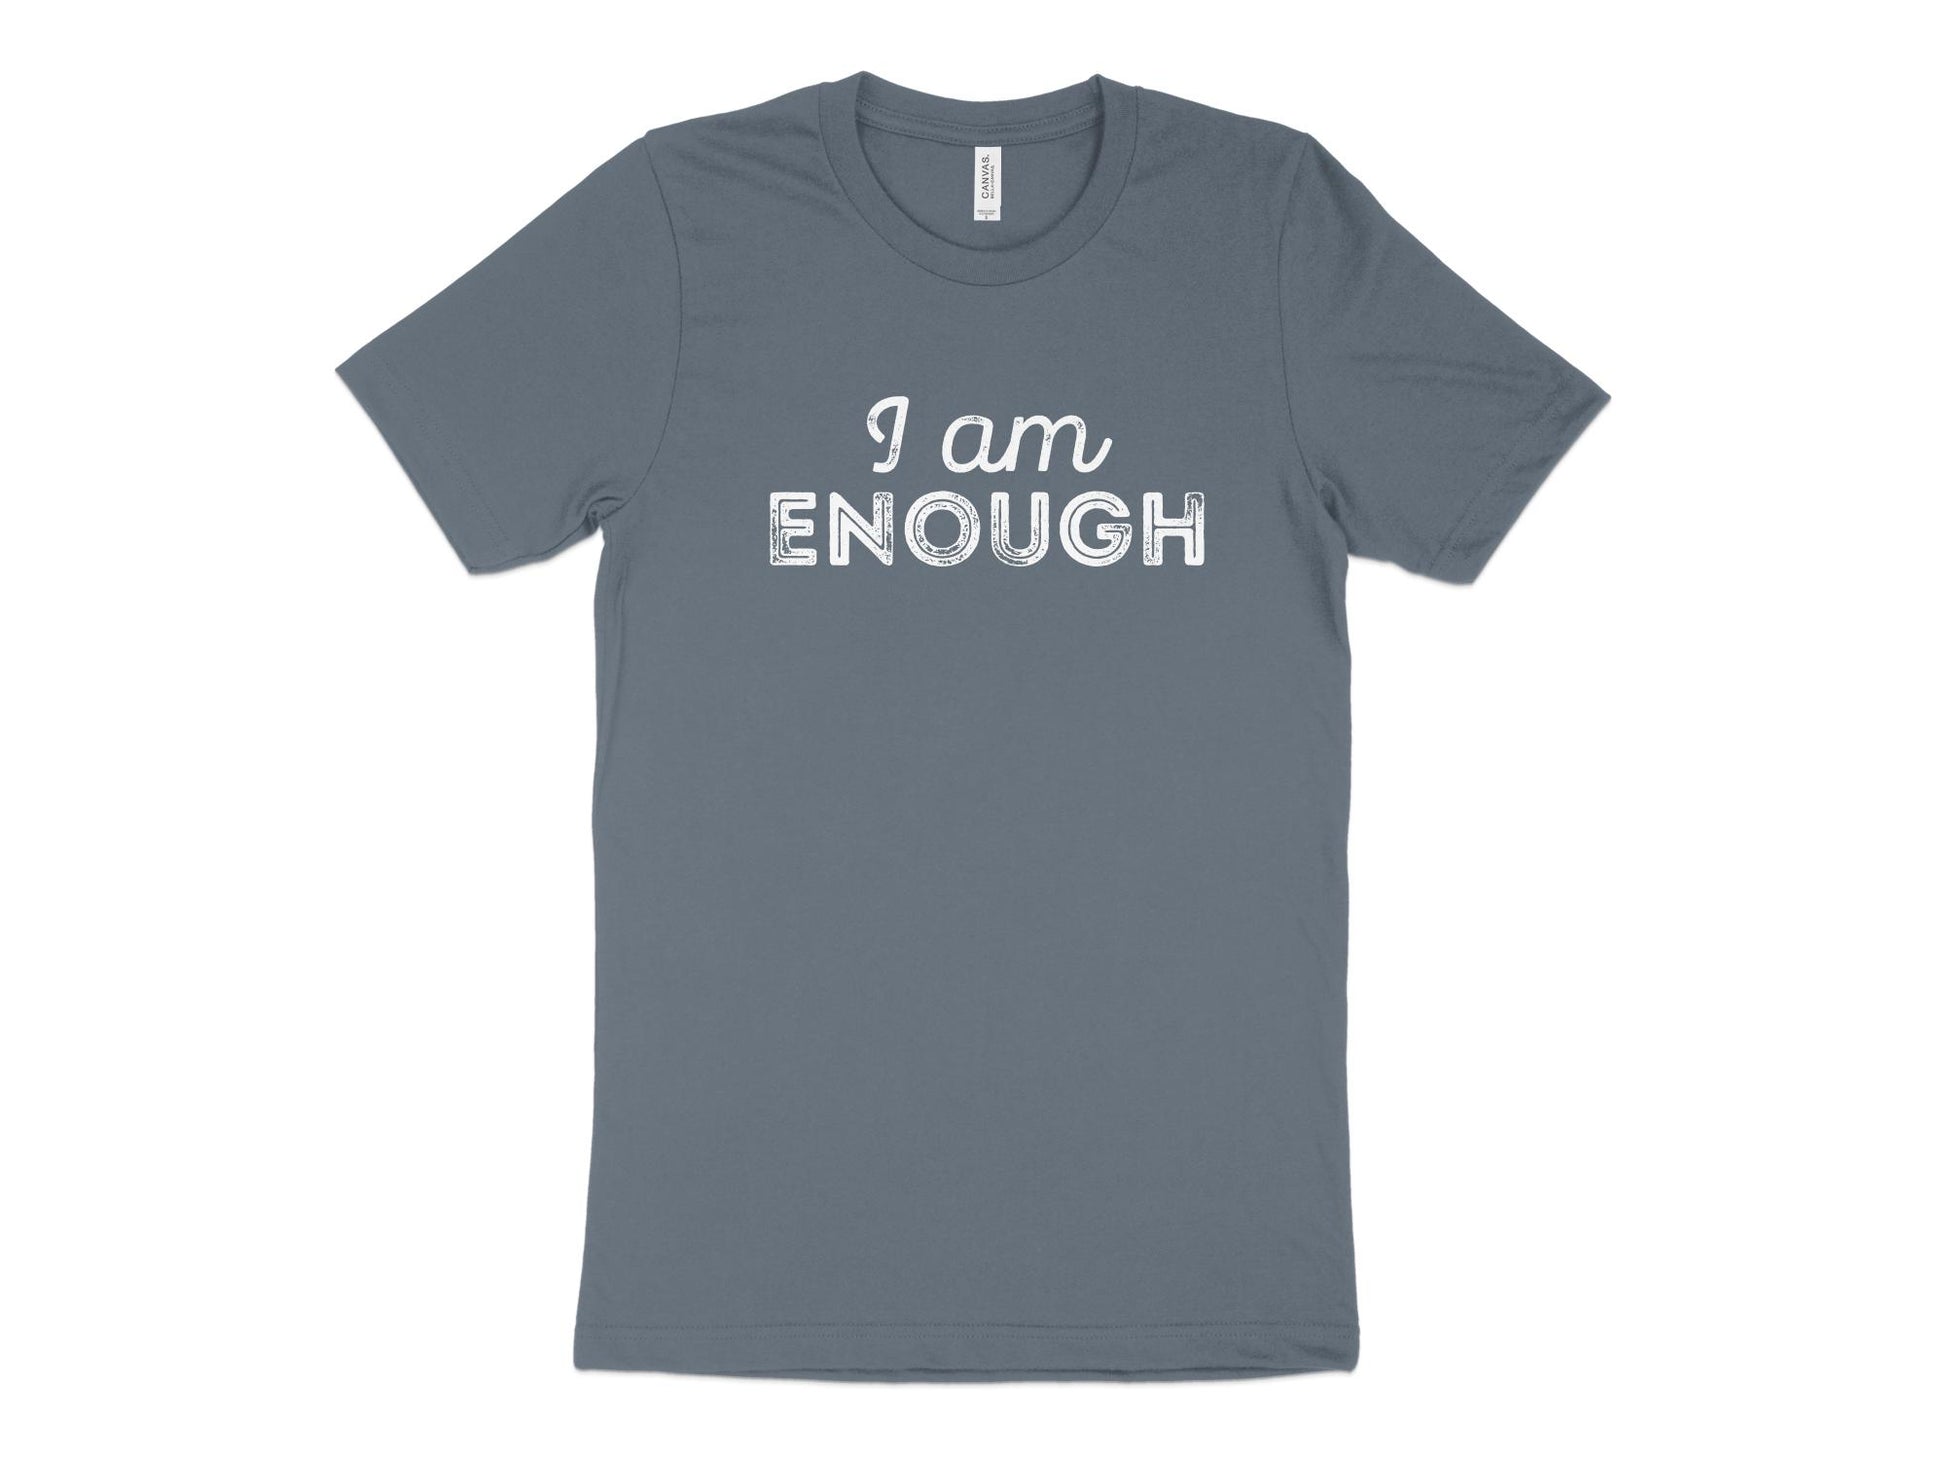 I Am Enough Shirt, gray